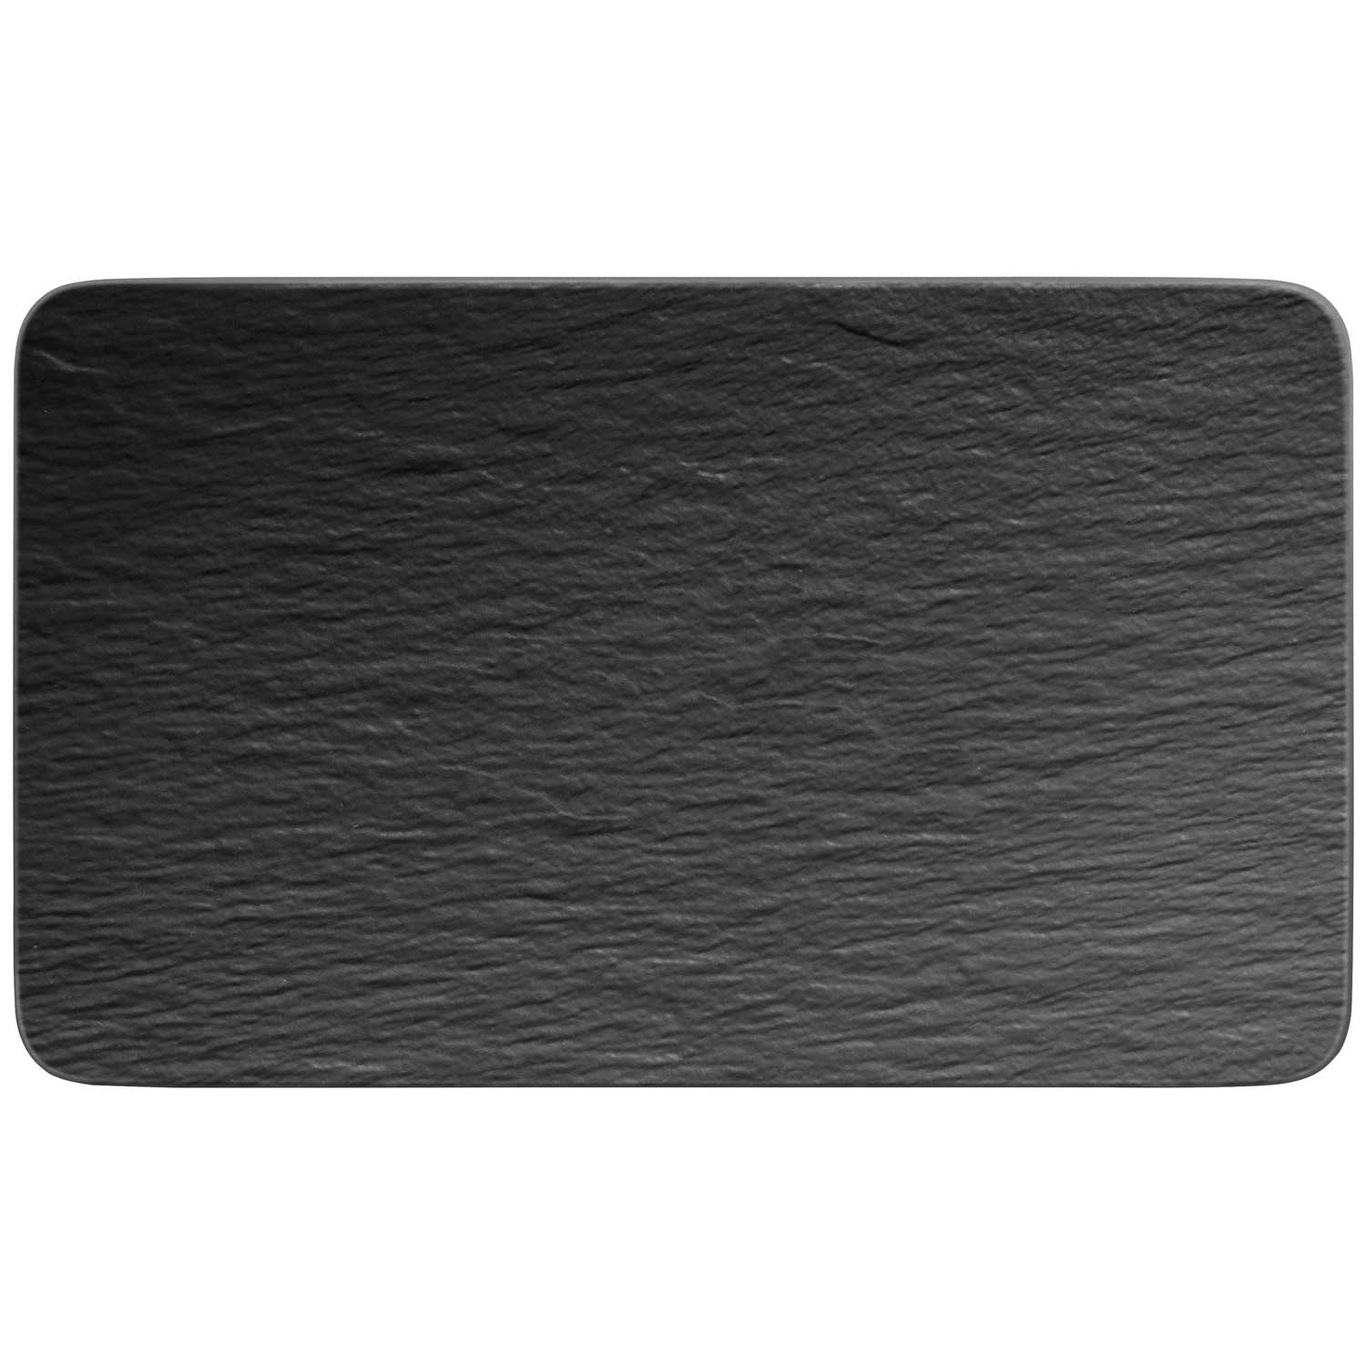 Manufacture Rock Serving Plate, Black 28 cm